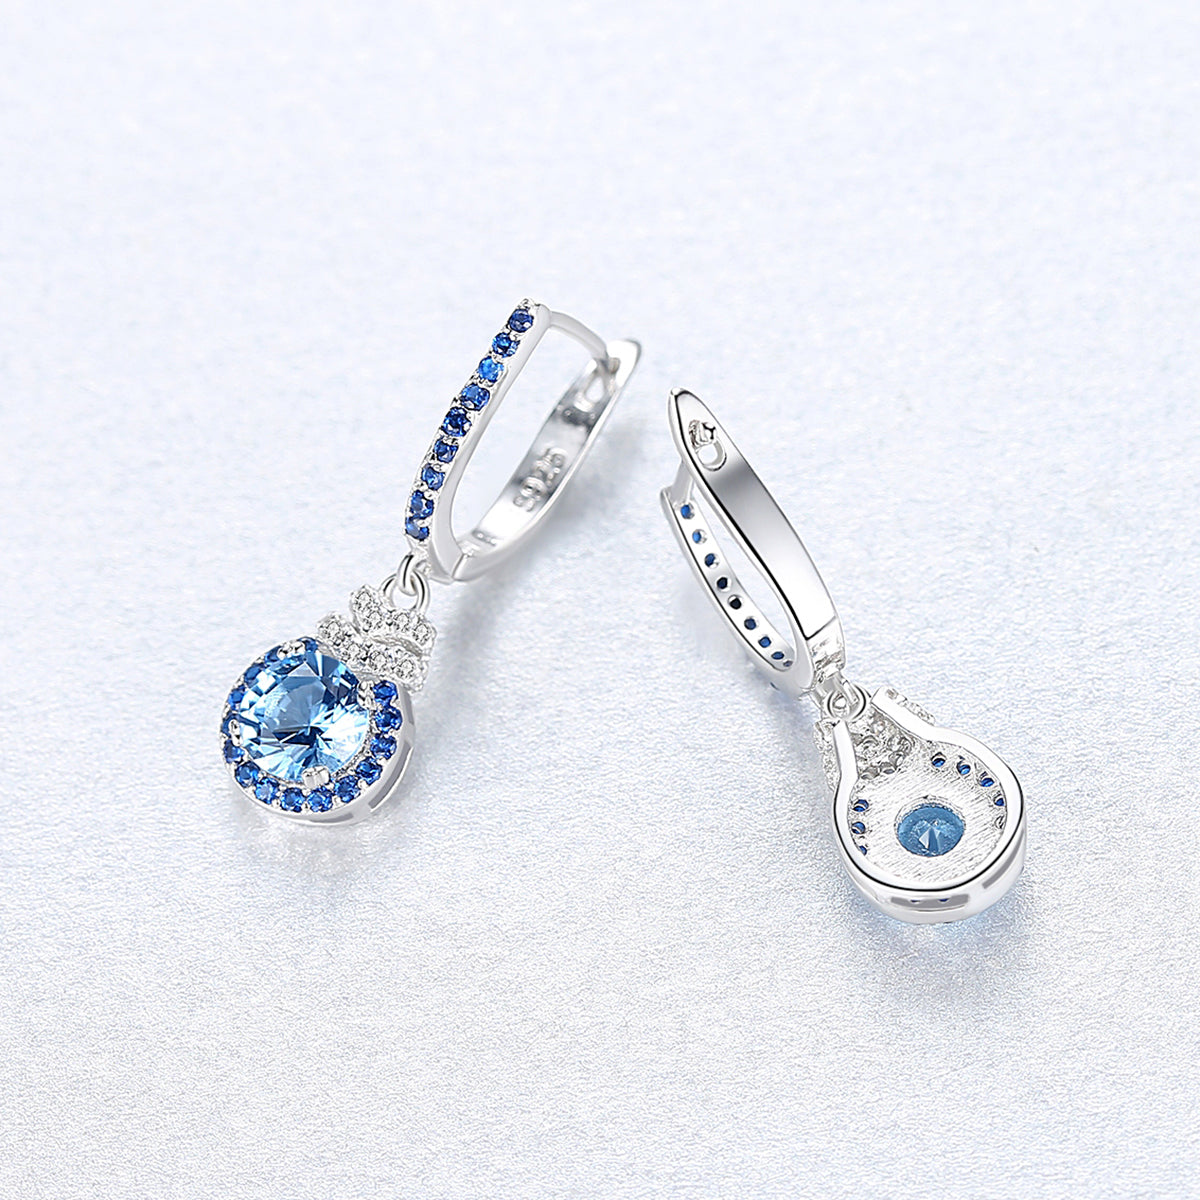 Topaz & Sapphire Simulants Silver Earrings